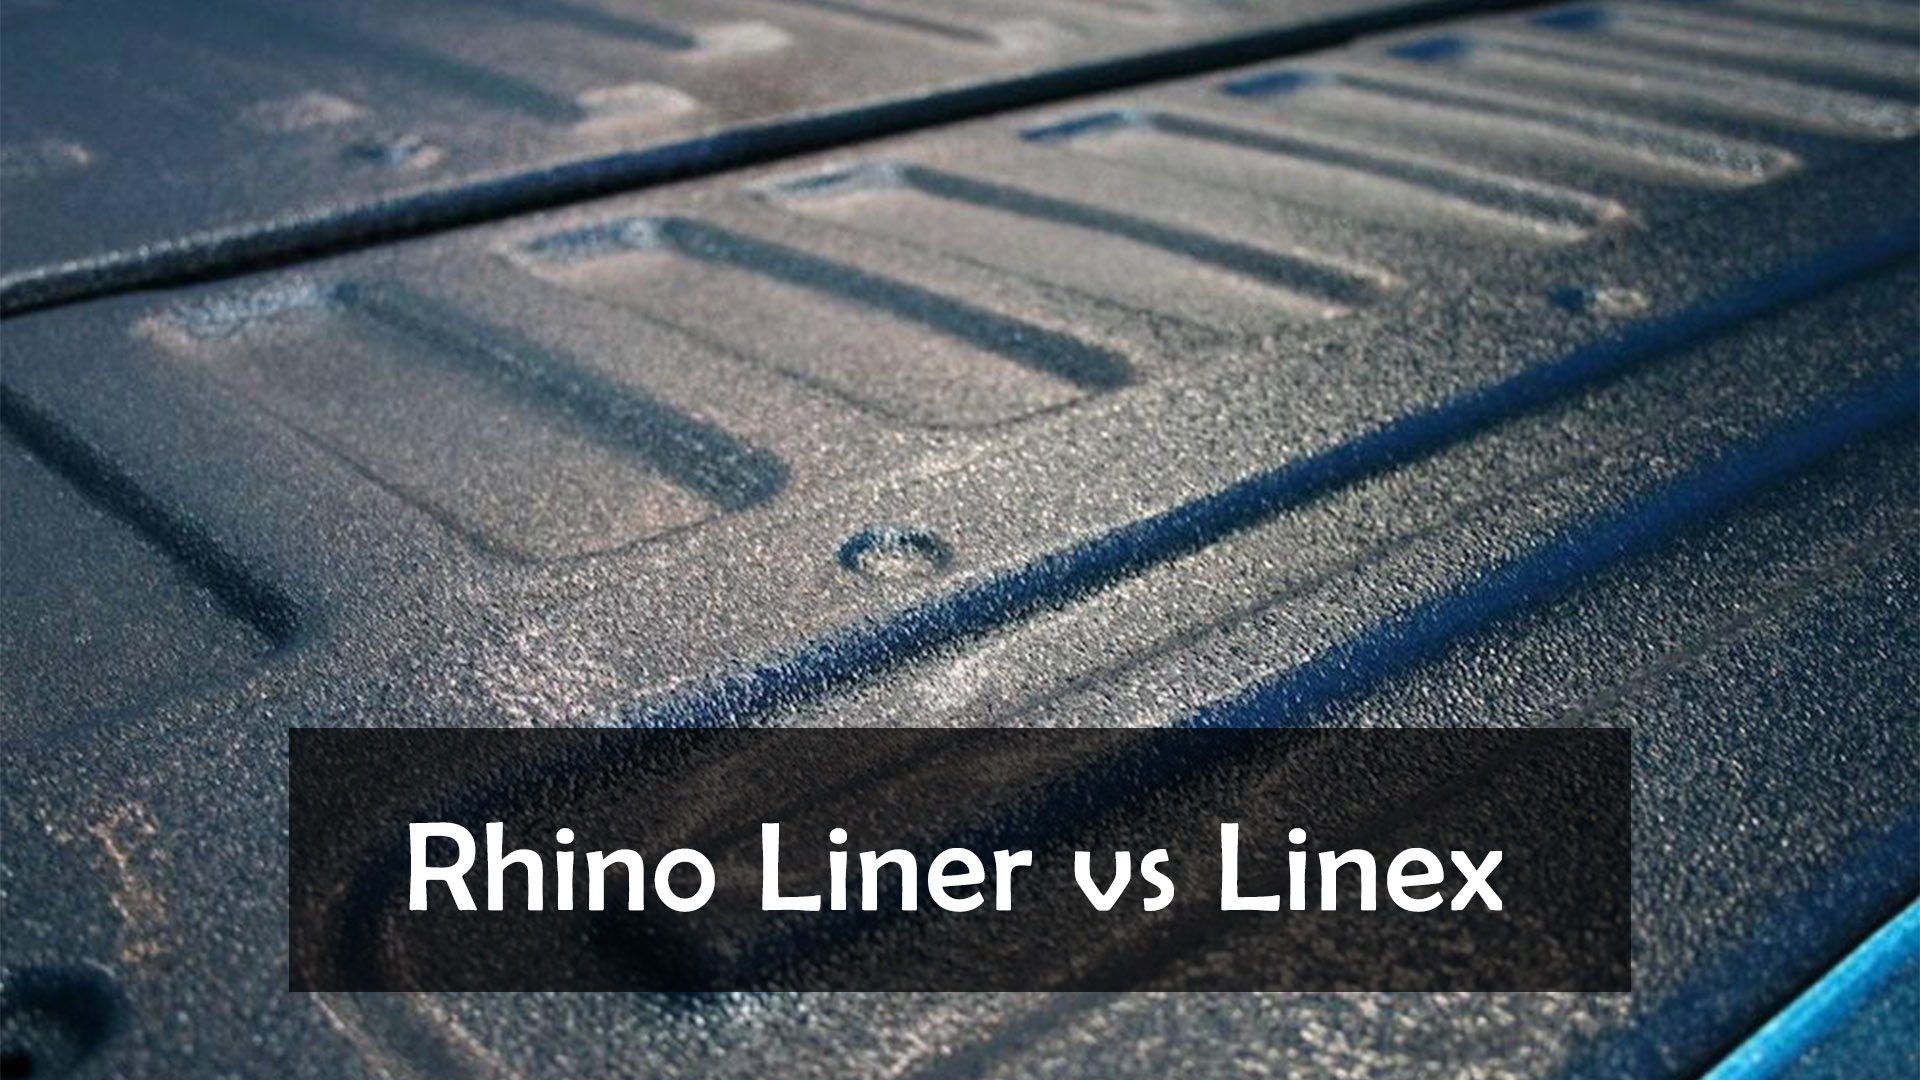 Rhino liner vs linex